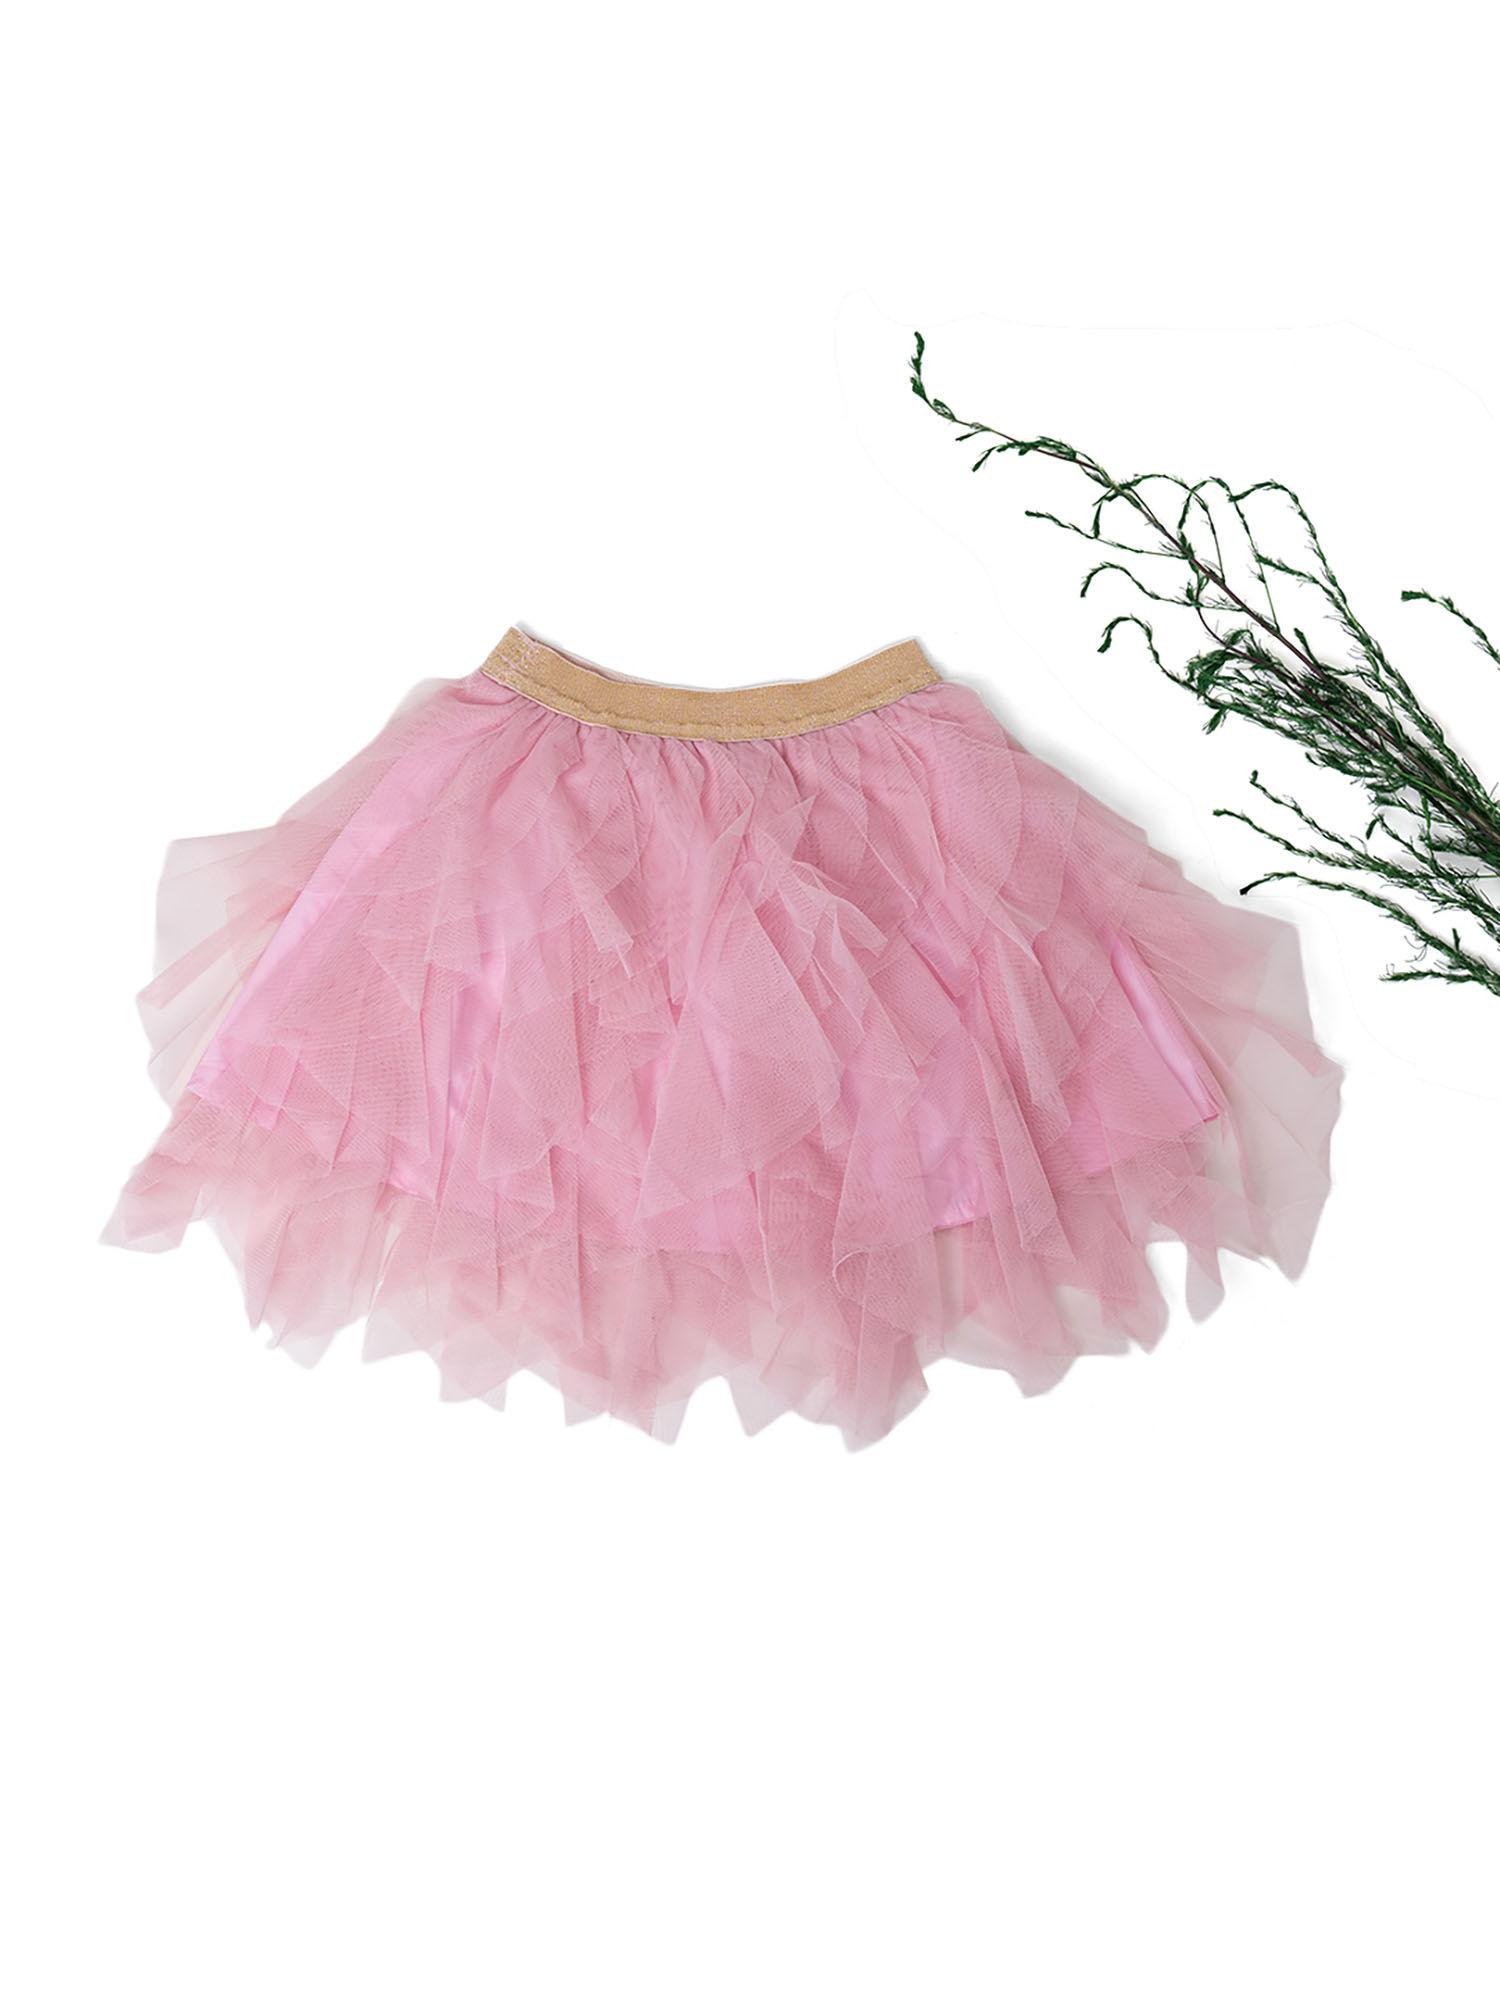 pink waterfall tutu skirt